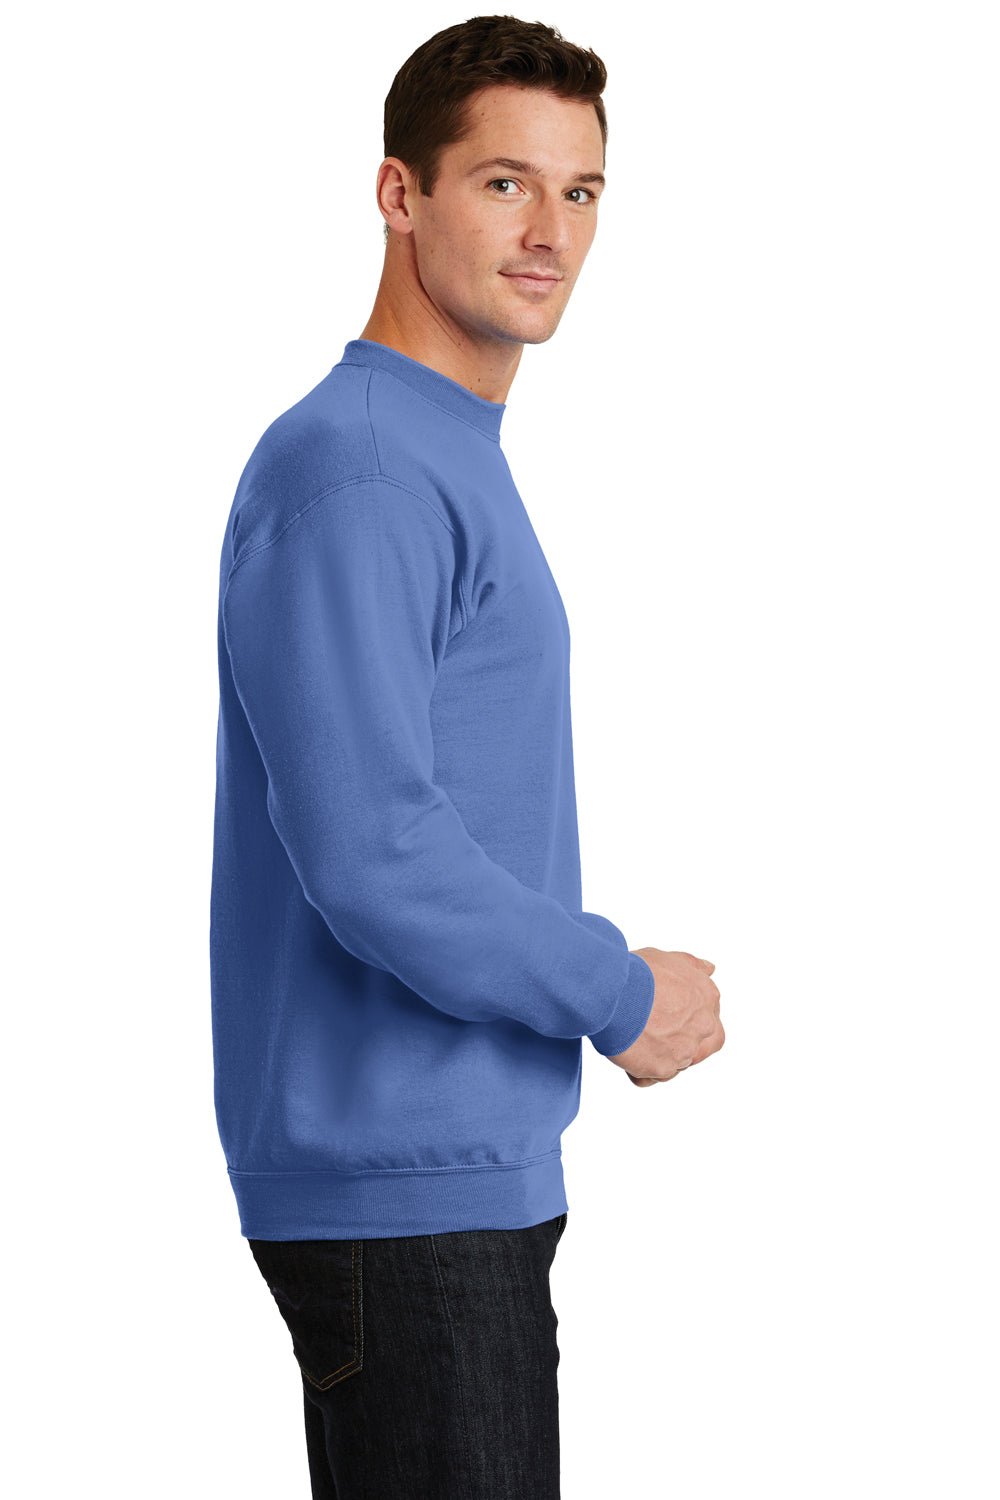 Port & Company PC78 Mens Core Fleece Crewneck Sweatshirt Carolina Blue Side